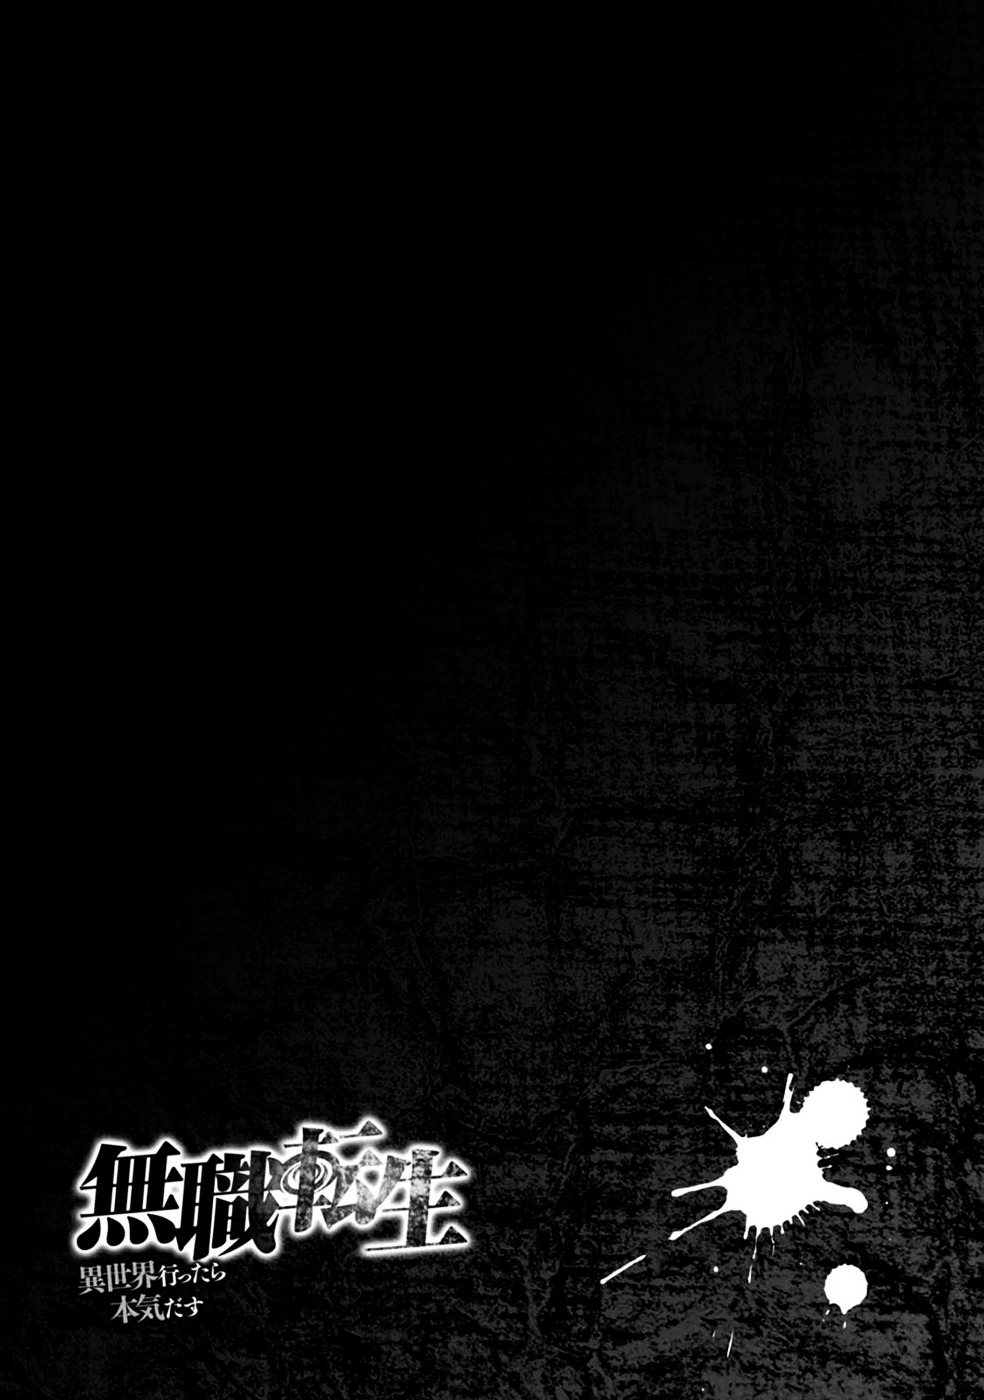 Mushoku Tensei: Jobless Reincarnation, Mushoku Tensei - Nouvelle vie, nouvelle chance, Mushoku Tensei: If I Get to a Parallel Universe I'll Bring Out my True Effort, Mushoku Tensei, Mushoku Tensei manga, Mushoku Tensei: Isekai Ittara Honki Dasu, Mushoku Tensei: Isekai Ittara Honki Dasu manga, mushoku tensei isekai ittara honki dasu episode 2 english sub, mushoku tensei isekai ittara honki dasu episode 1 english sub, mushoku tensei isekai ittara honki dasu ep 3, mushoku tensei episode 3 release date, mushoku tensei rudeus, mushoku tensei characters, mushoku tensei mal, mushoku tensei how many episodes, mushoku tensei light novel, mushoku tensei wiki, mushoku tensei ep 2, mushoku tensei crunchyroll, mushoku tensei ep 3, roxy migurdia, mushoku tensei sub indo, mushoku tensei reddit, mushoku tensei netflix, sylphiette, future rudeus, mushoku tensei volume 1 illustrations, studio bind, mushoku tensei isekai ittara honki dasu, mushoku tensei episode 1, mushoku tensei novel, mushoku tensei manga volume 1, mushoku tensei anime episode 1, mushoku tensei volume 23, mushoku tensei episode 1 sub indo, mushoku tensei amazon, mushoku tensei vietsub, mushoku tensei: jobless reincarnation vostfr, mushoku tensei isekai ittara honki dasu ep 2, mushoku tensei isekai ittara honki dasu streaming, download anime mushoku tensei isekai ittara honki dasu, A Reencarnação do Vagabundo: Vou dar meu melhor se for para outro mundo, Jobless Reincarnation - I Will Go All Out When I'm Transported to Another World, Jobless Reincarnation - It Will be All Out if I Go to Another World, Mr. No-Job's New Life - If I Go to a Parallel World, Then I'll Get Serious, Реинкарнация безработного ~История о приключениях в другом мире~, Pеинкарнация безработного: Попав в другой мир, я стану сёръёзнее, เกิดชาตินี้พี่ต้องเทพ, 无职转生, 무직전생 〜다른 세계 가면 진심 낸다〜,